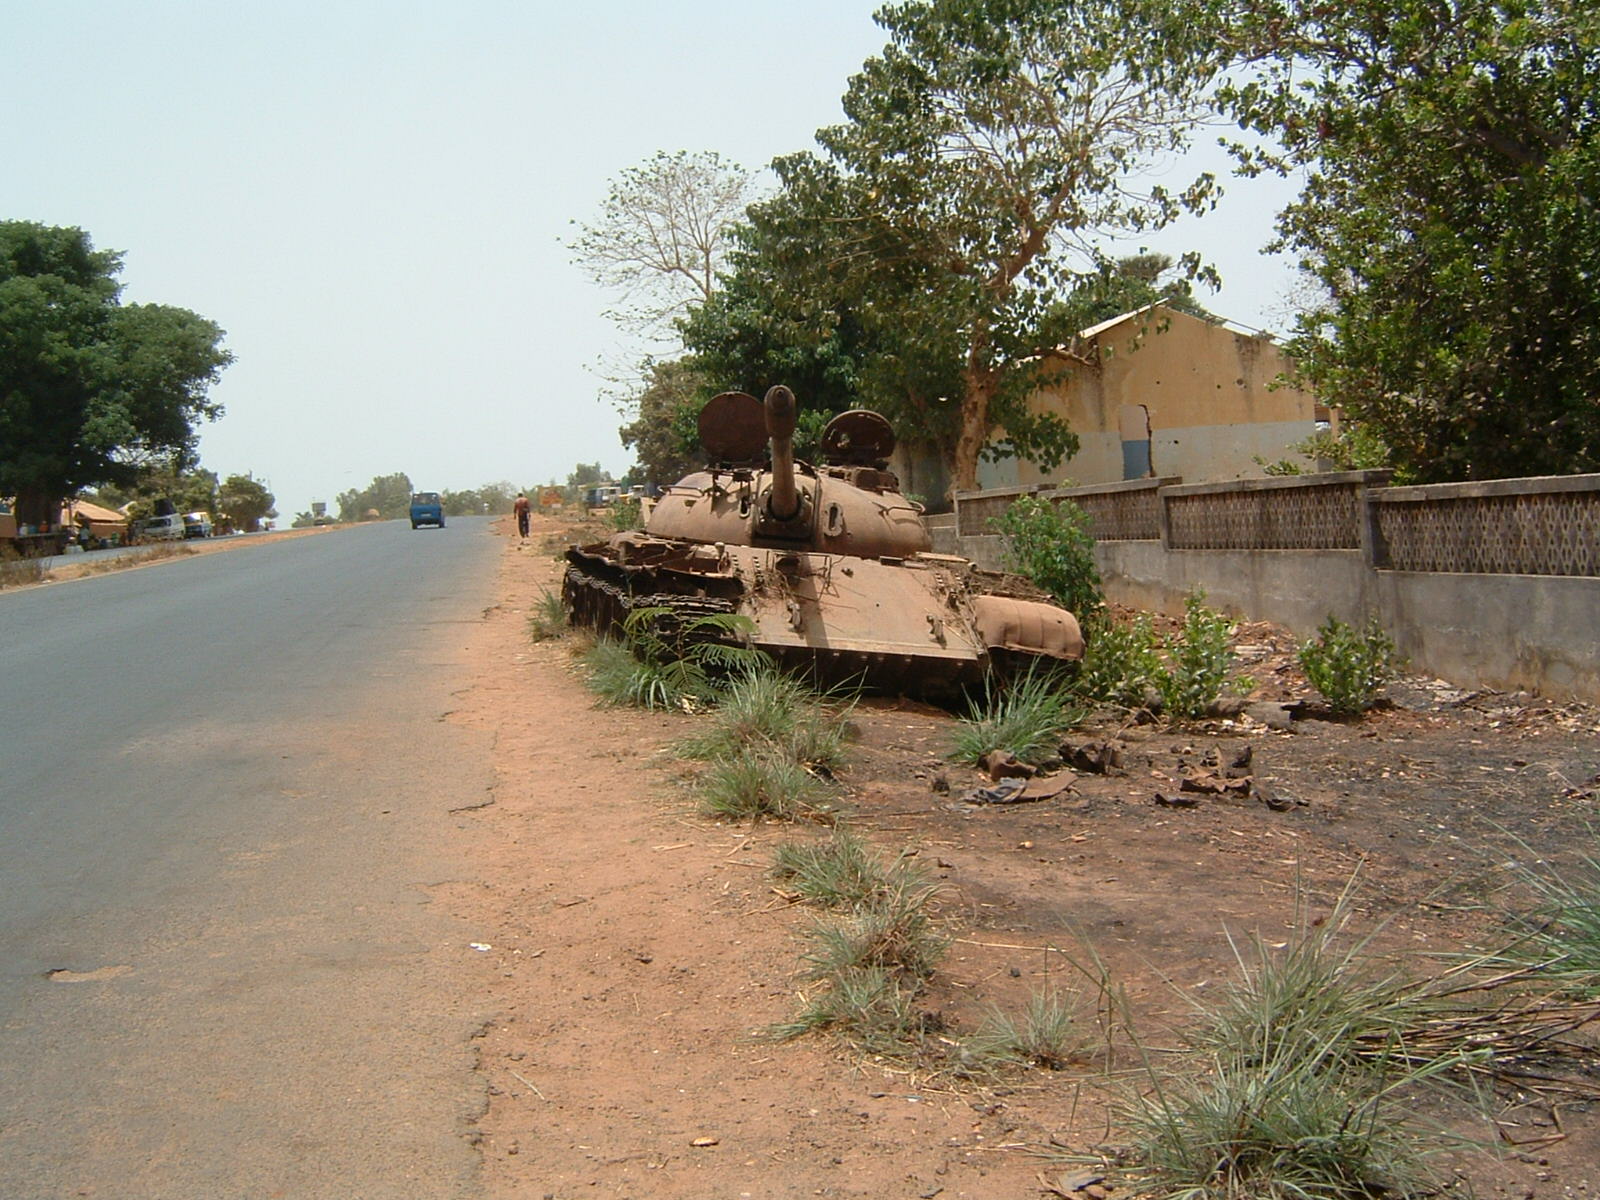 Bissau_-_Abandoned_tank